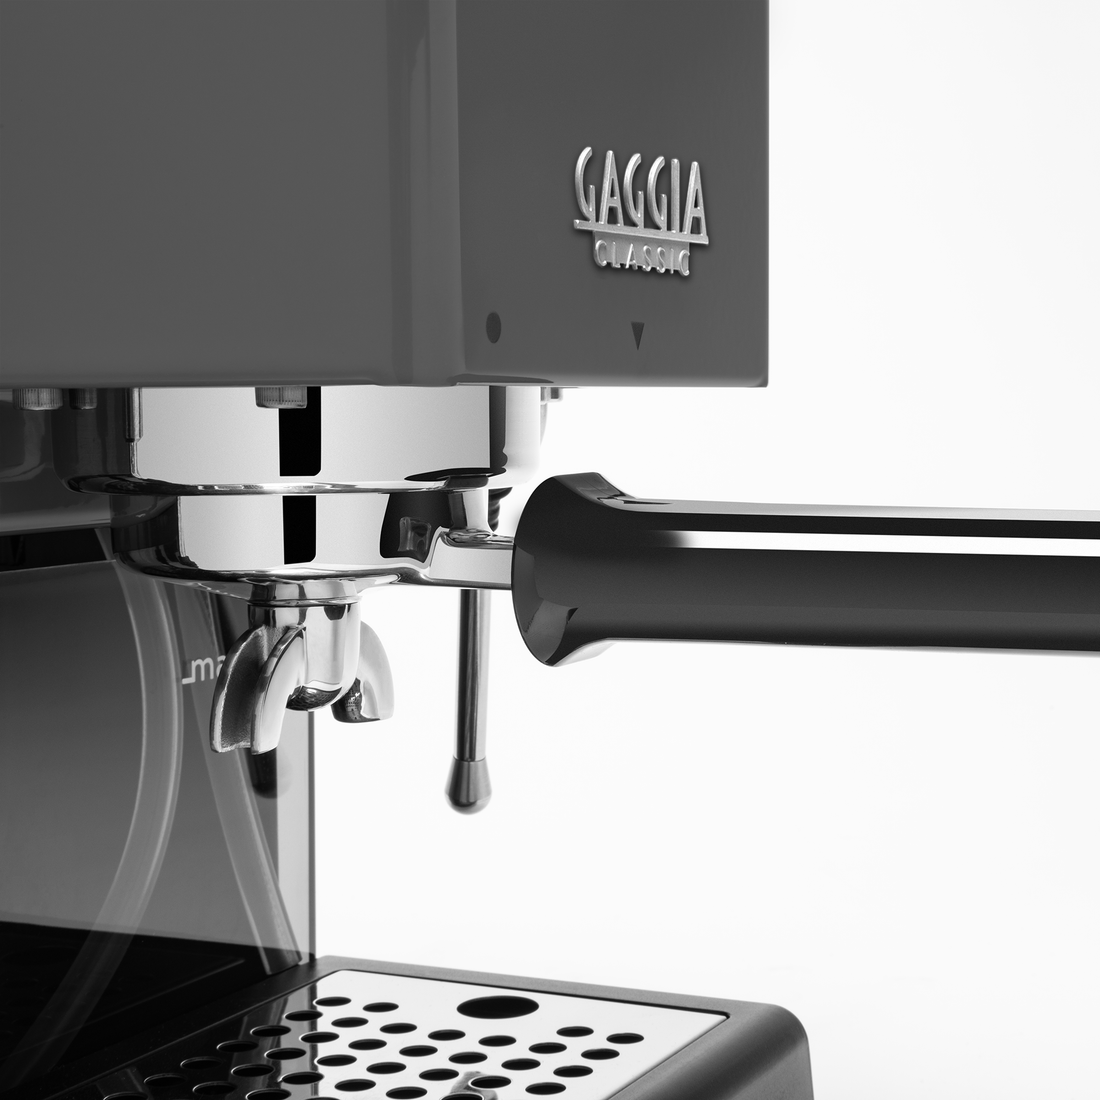 Gaggia Classic Evo Pro Espresso Machine in Industrial Grey with Blackened Oak